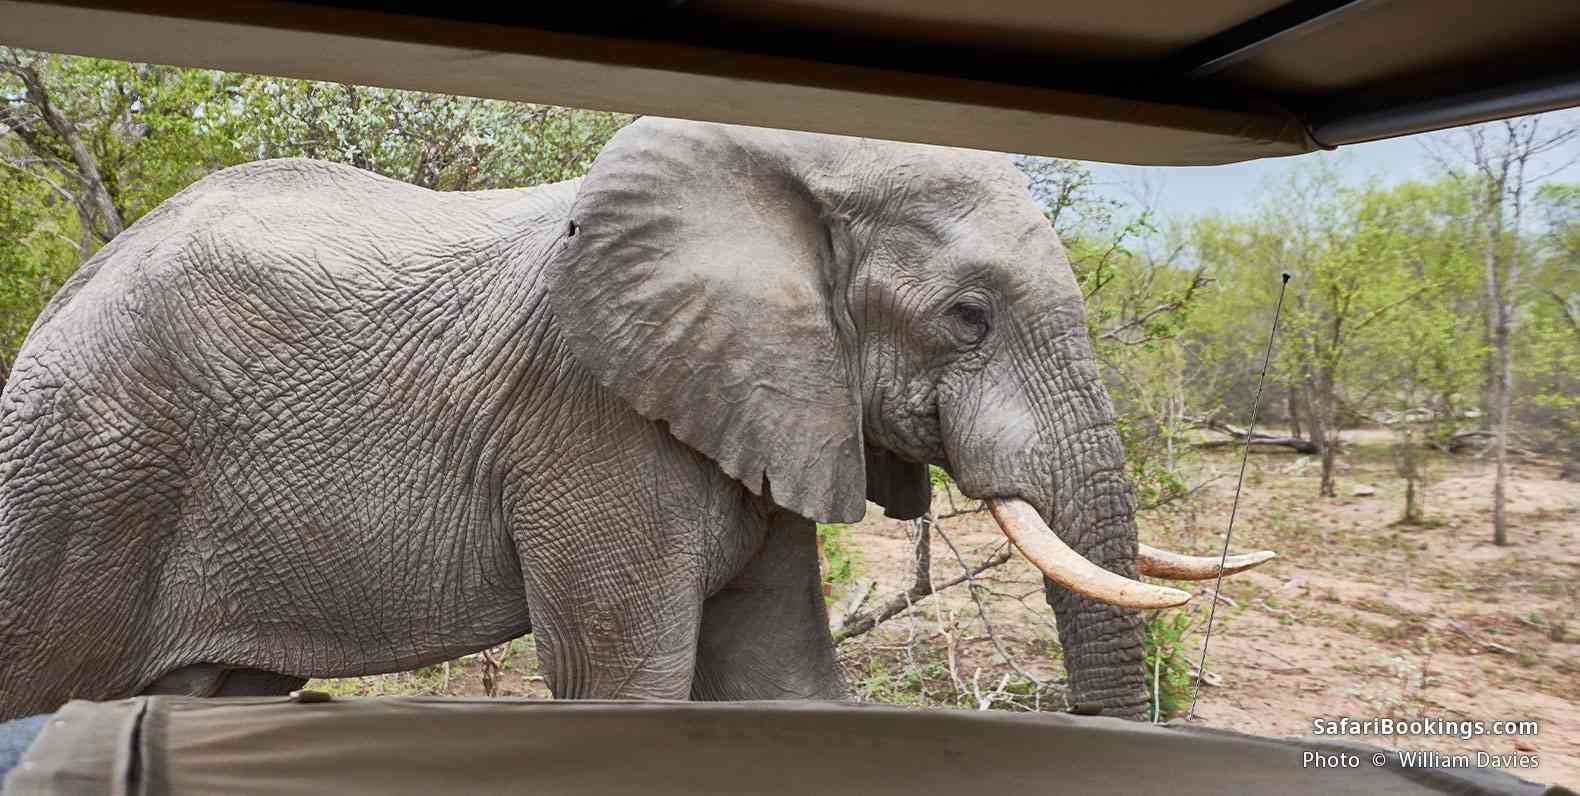 Elephant next to a safari vehicle